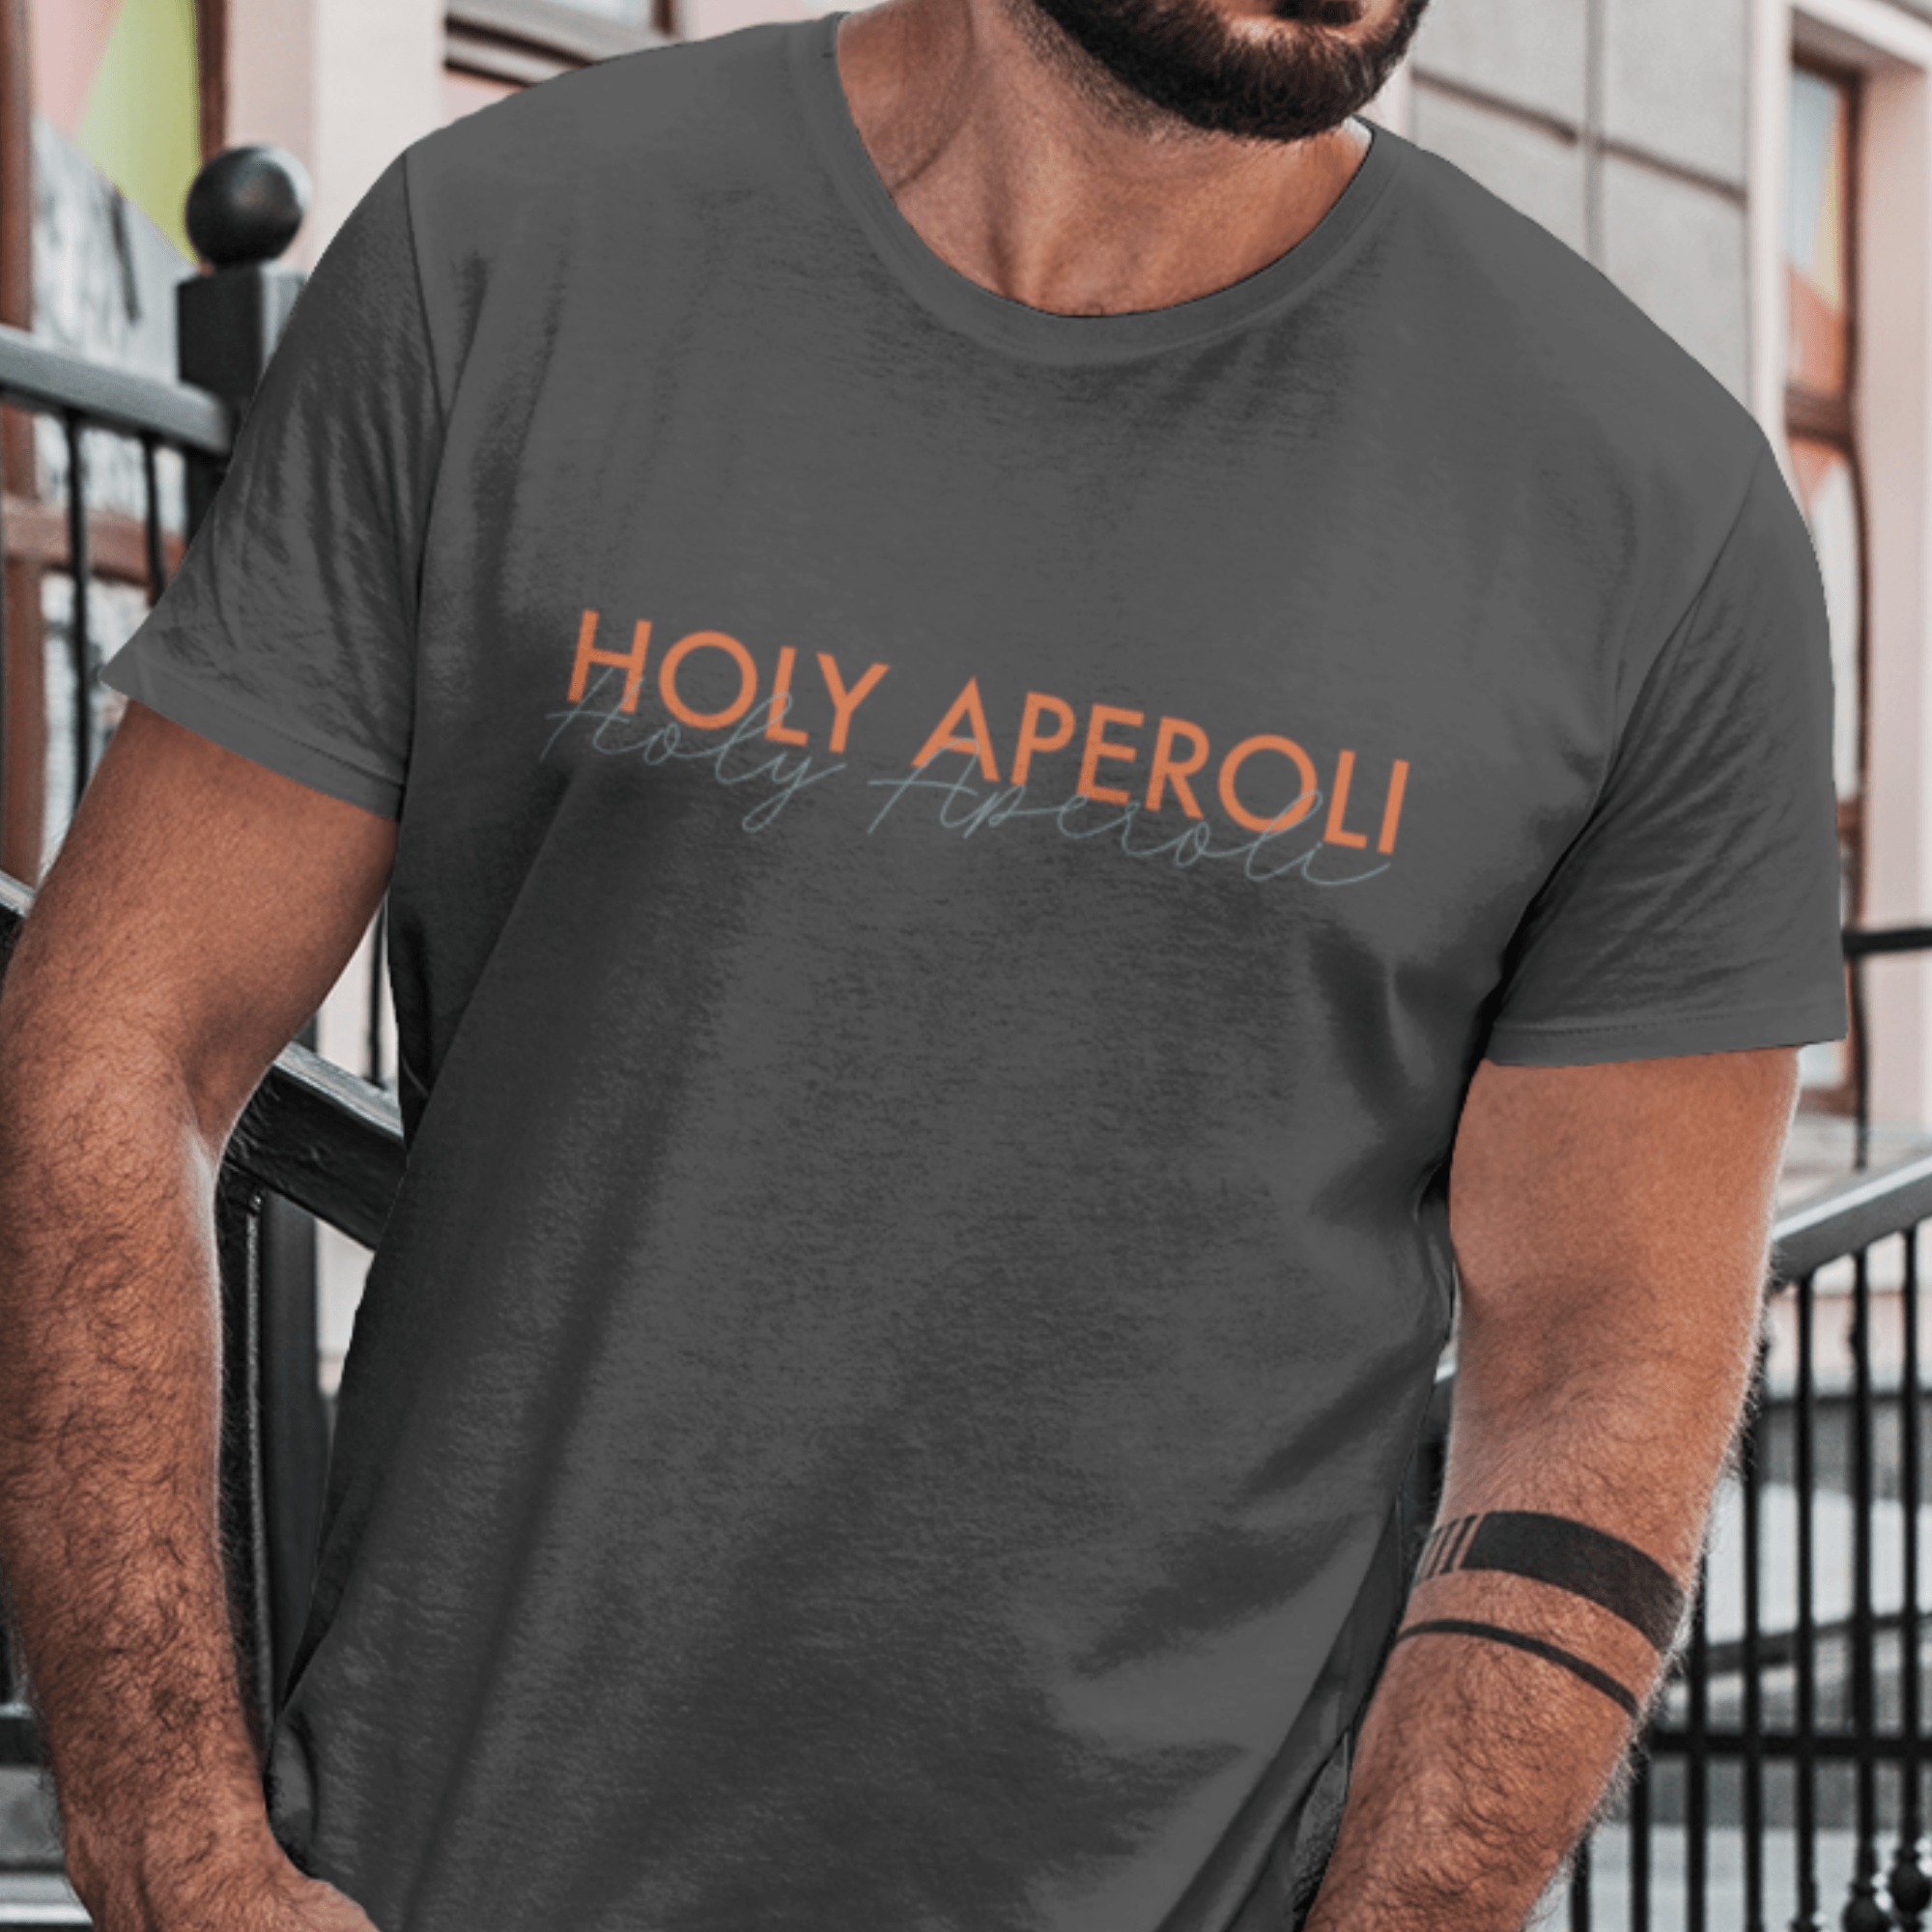 HOLY APEROLI - Herren Organic Shirt - einschenken24.de